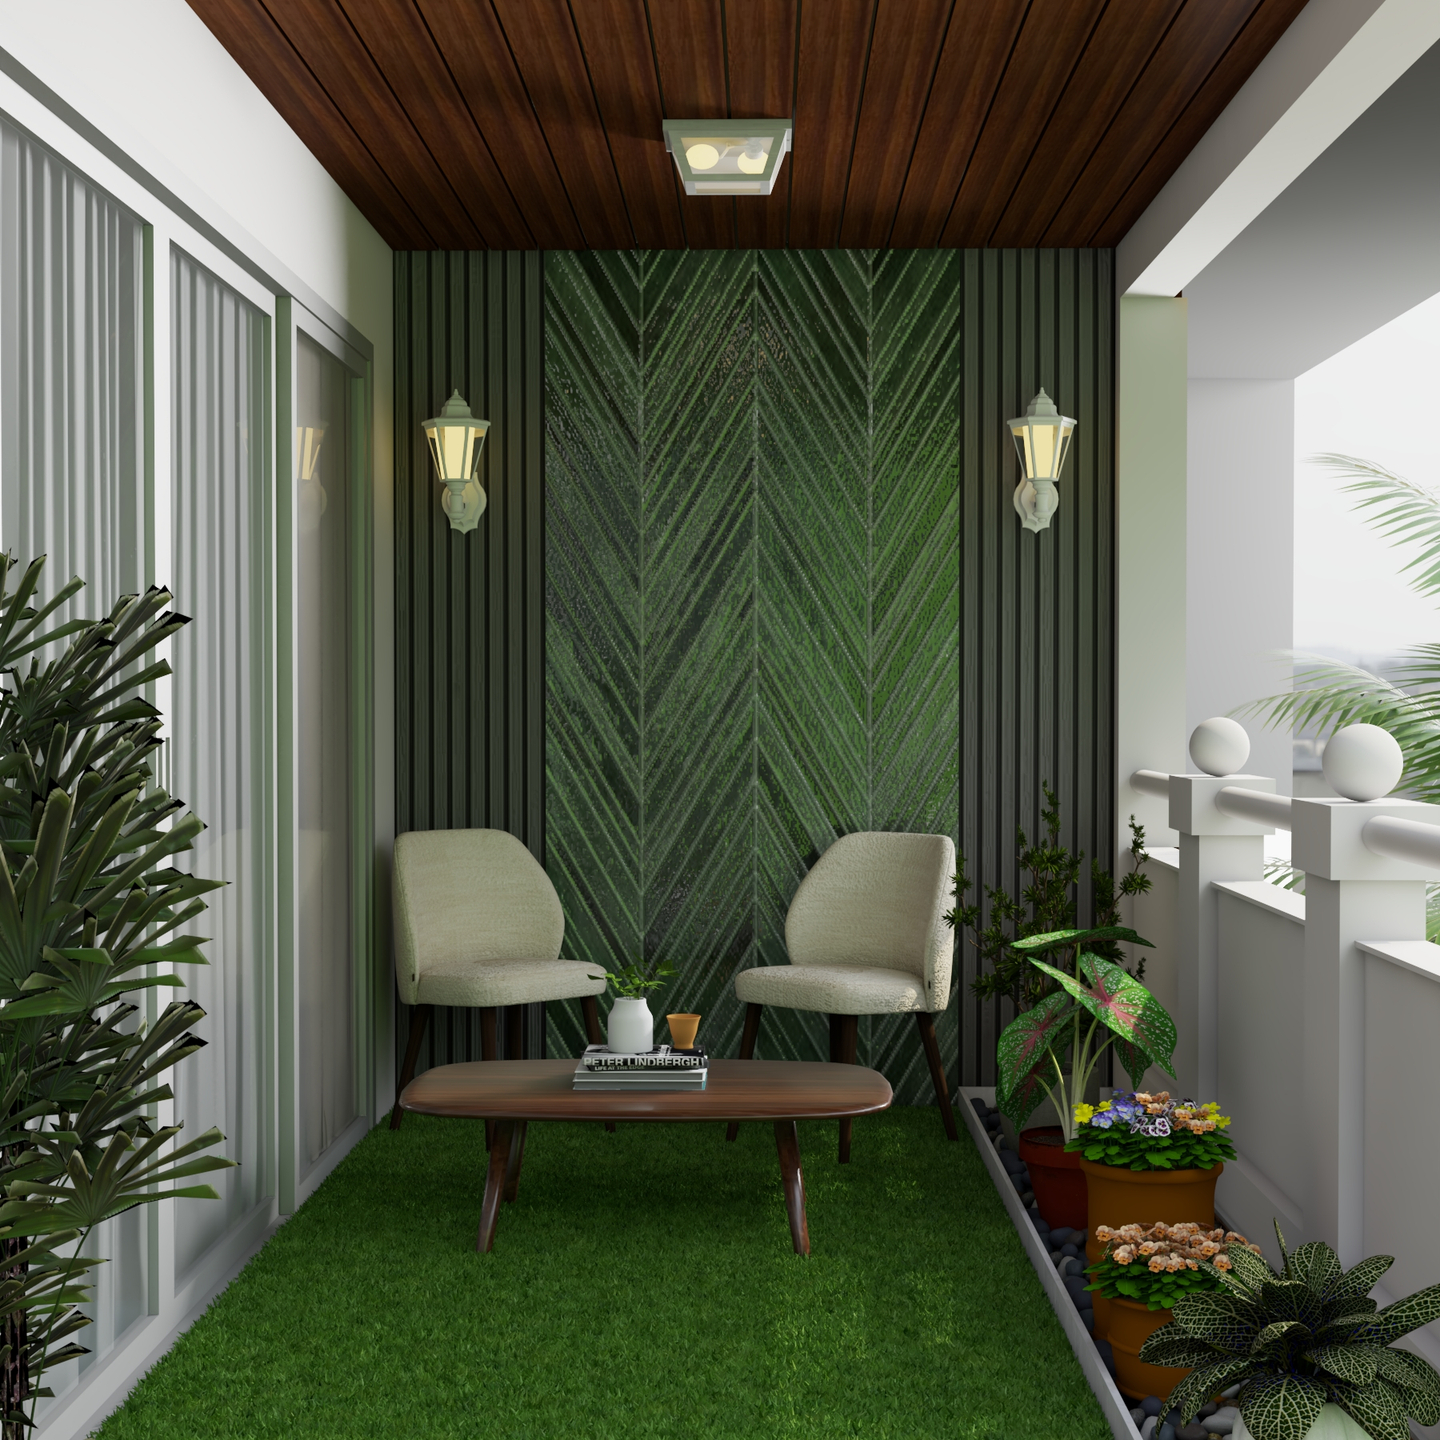 Contemporary Balcony Design With Artificial Garden Setup - Livspace